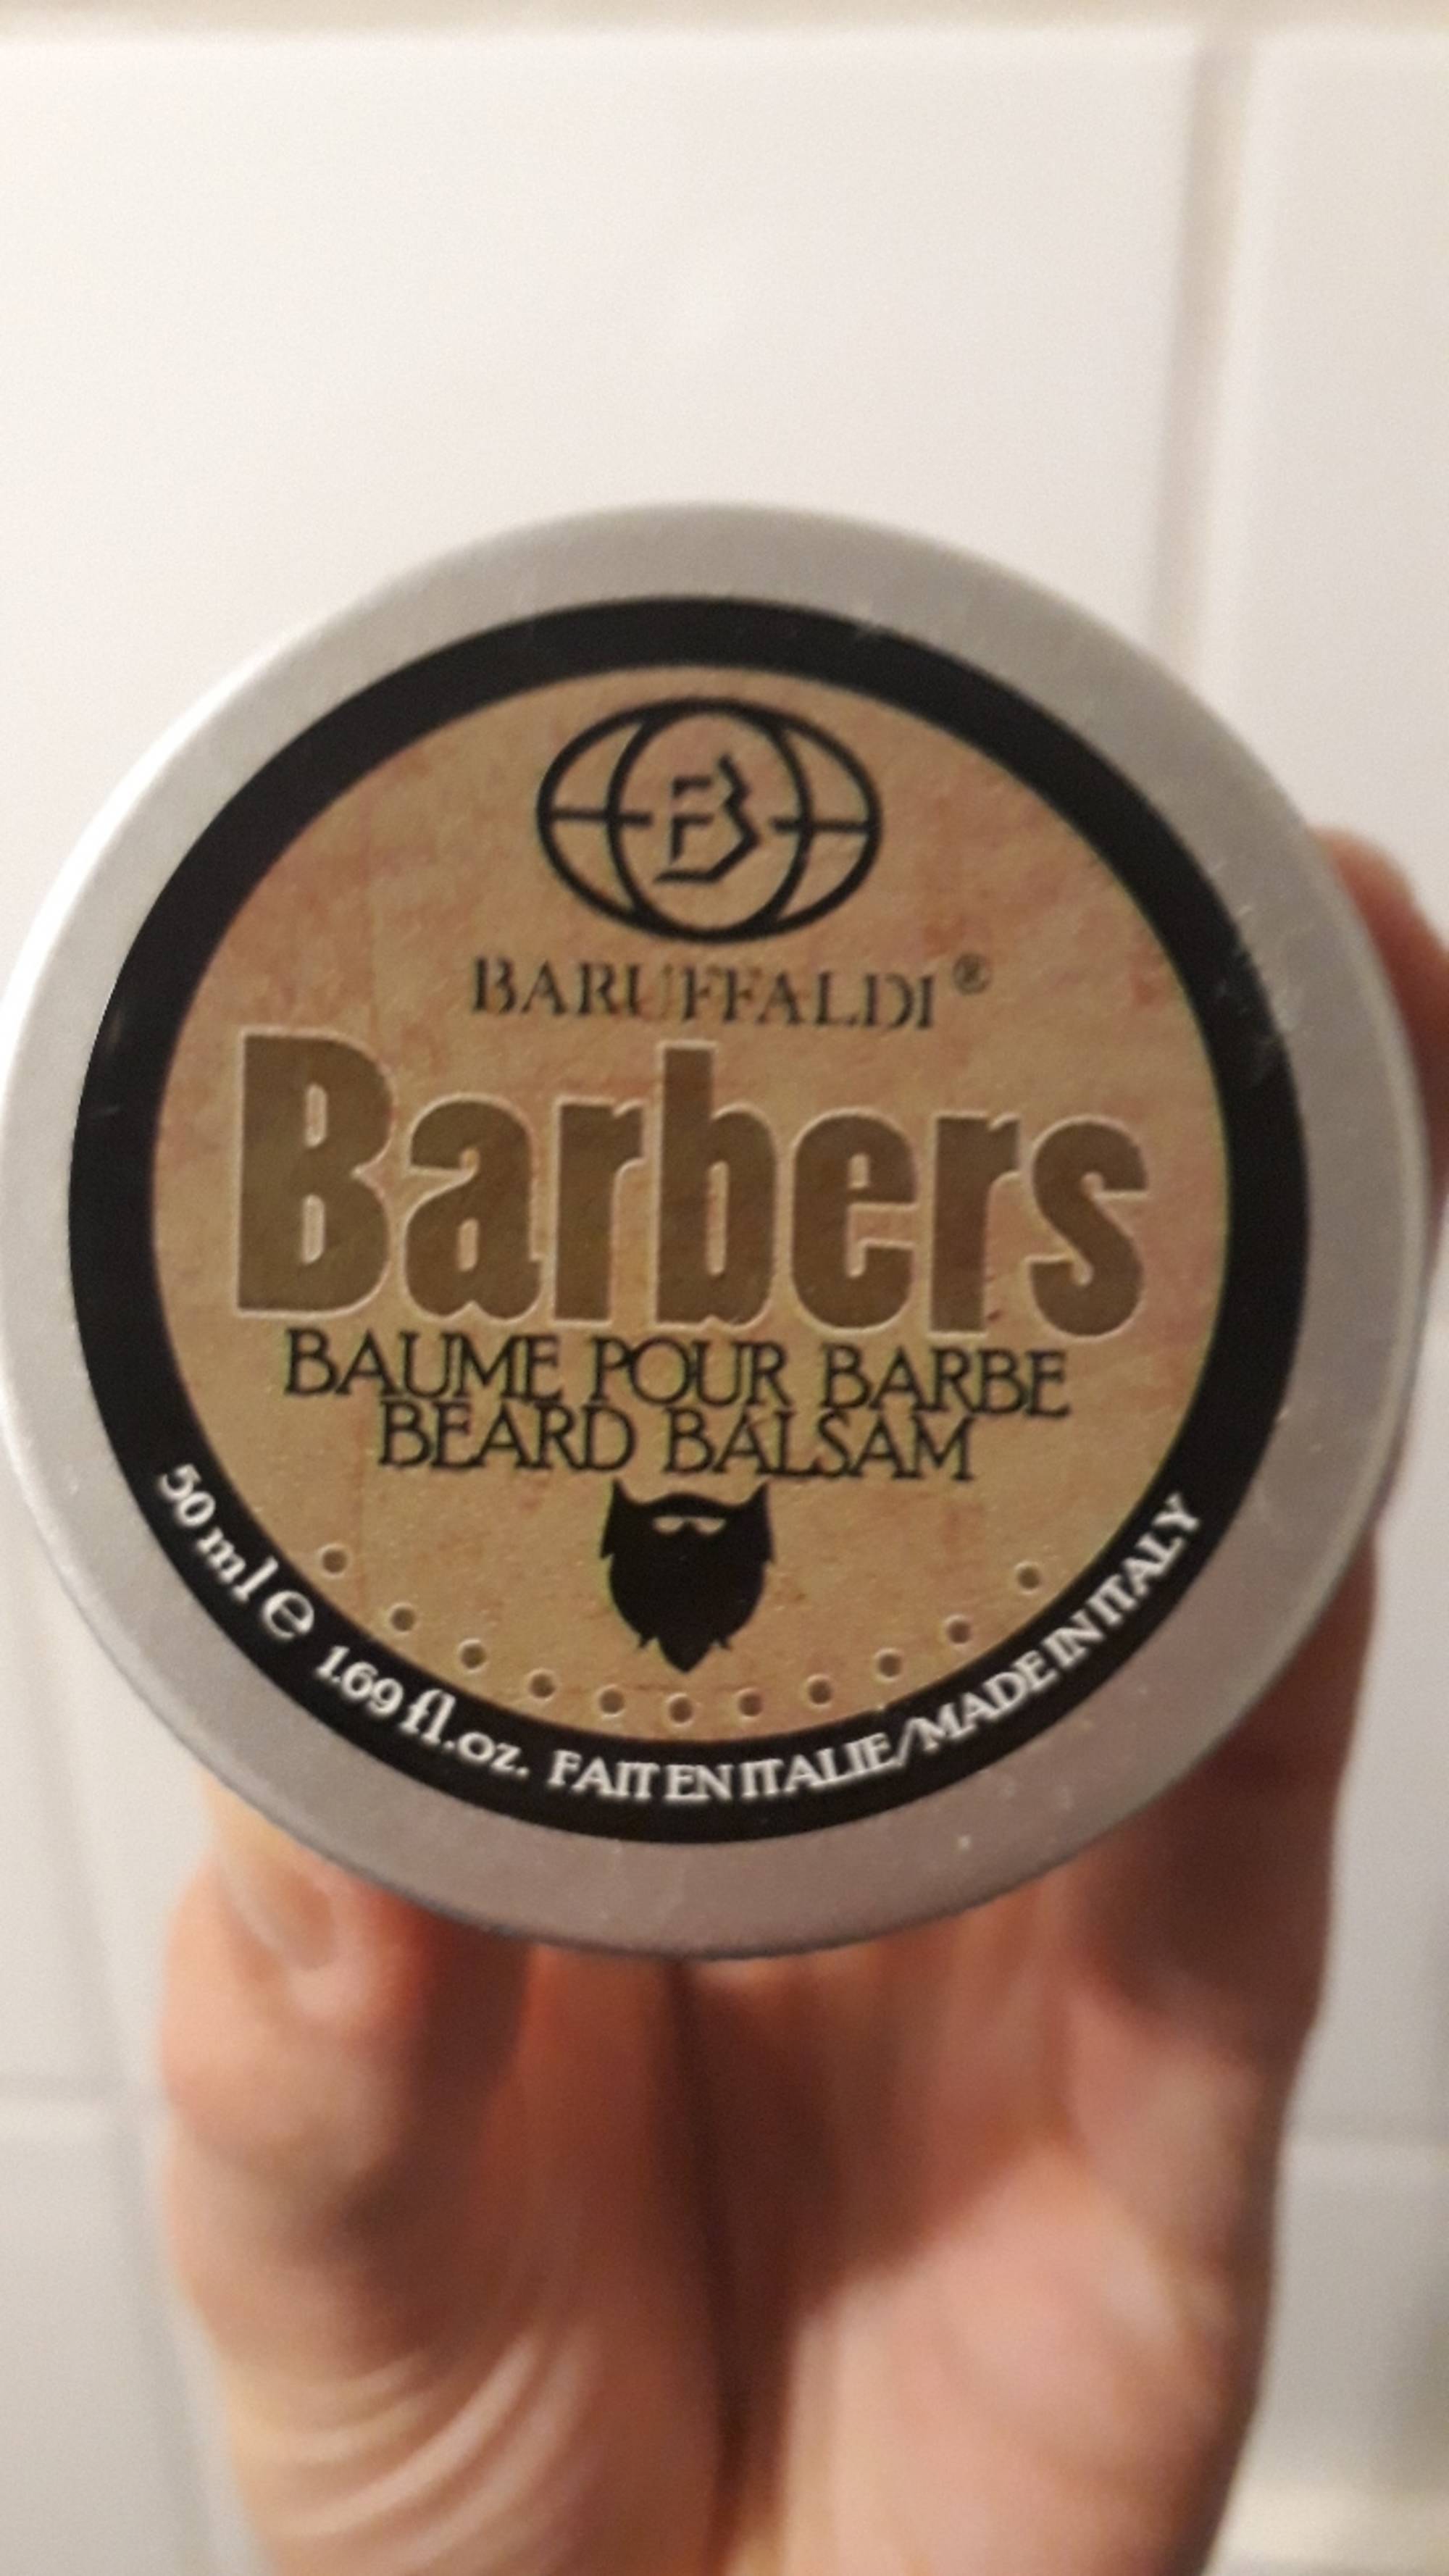 BARUFFALDI - Barbers - Baume pour barbe